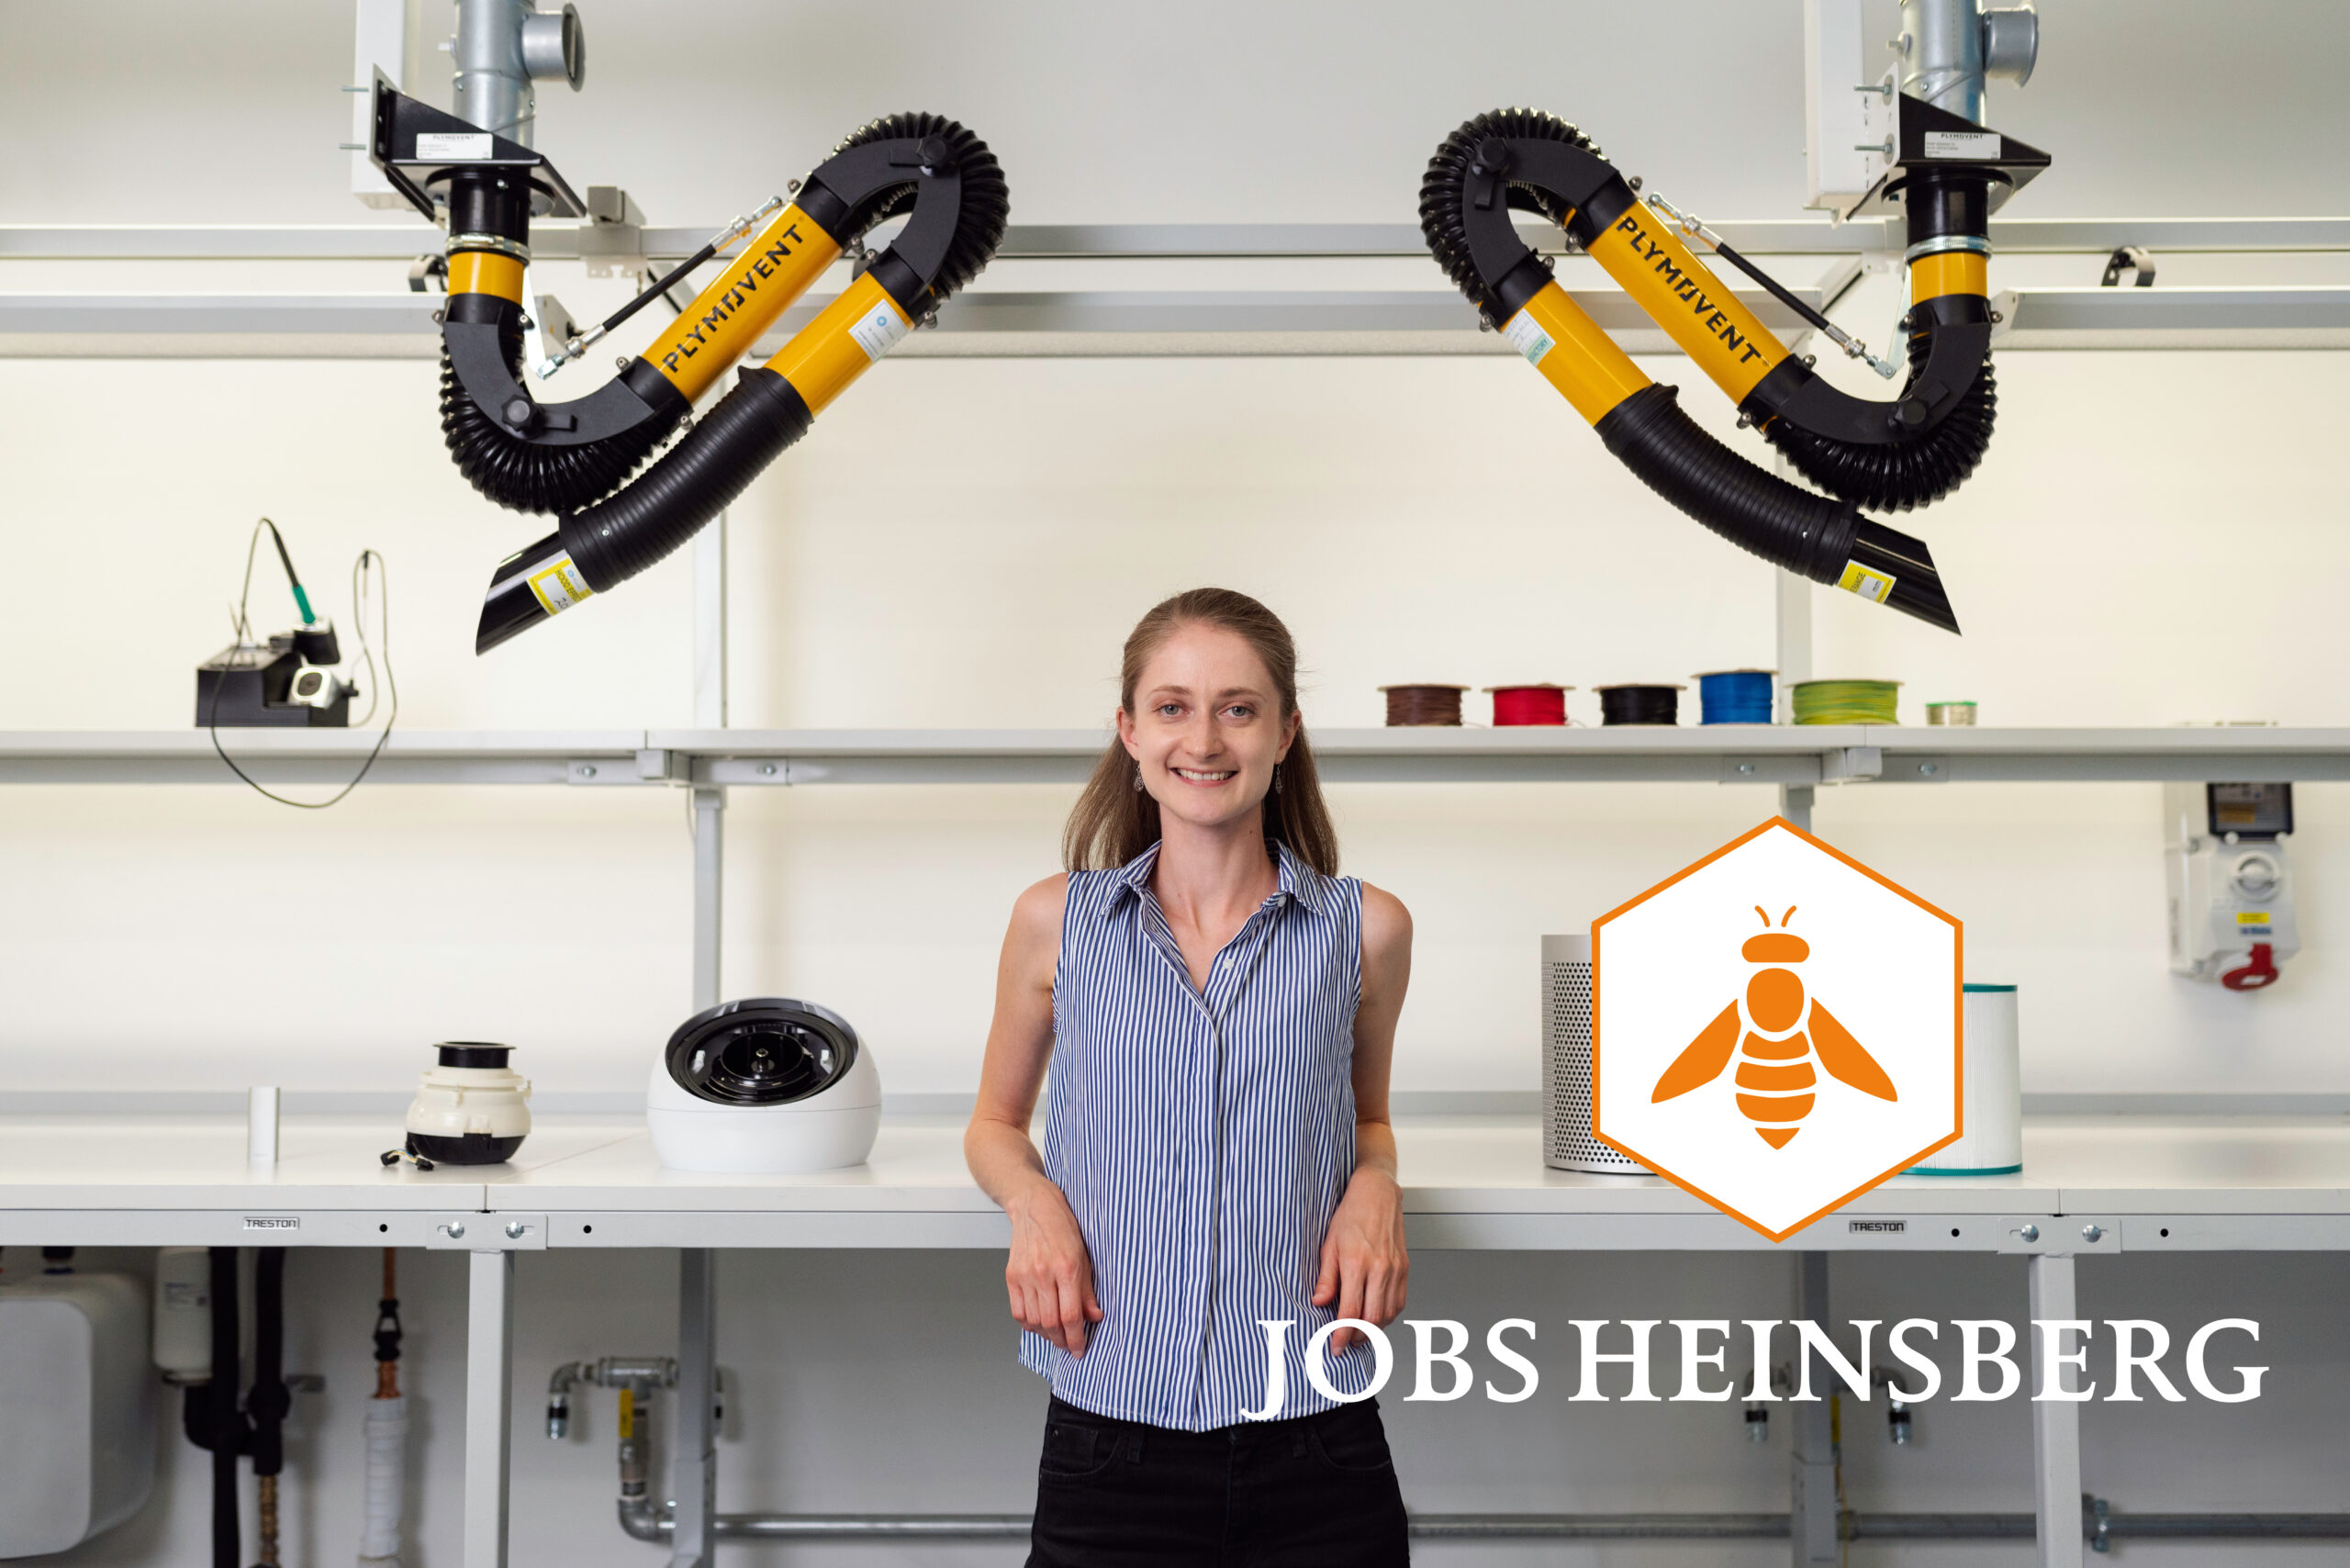 Featured image for “Jobs Heinsberg – Job suchen & bewerben!”